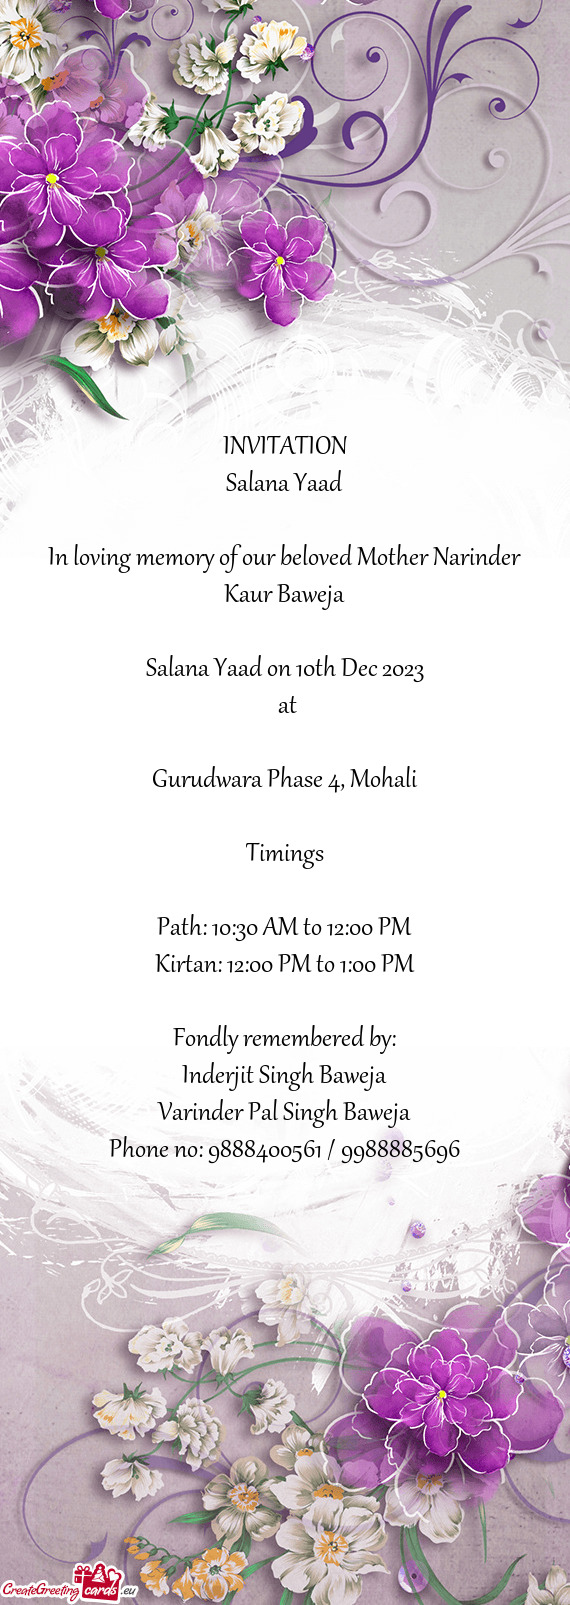 In loving memory of our beloved Mother Narinder Kaur Baweja